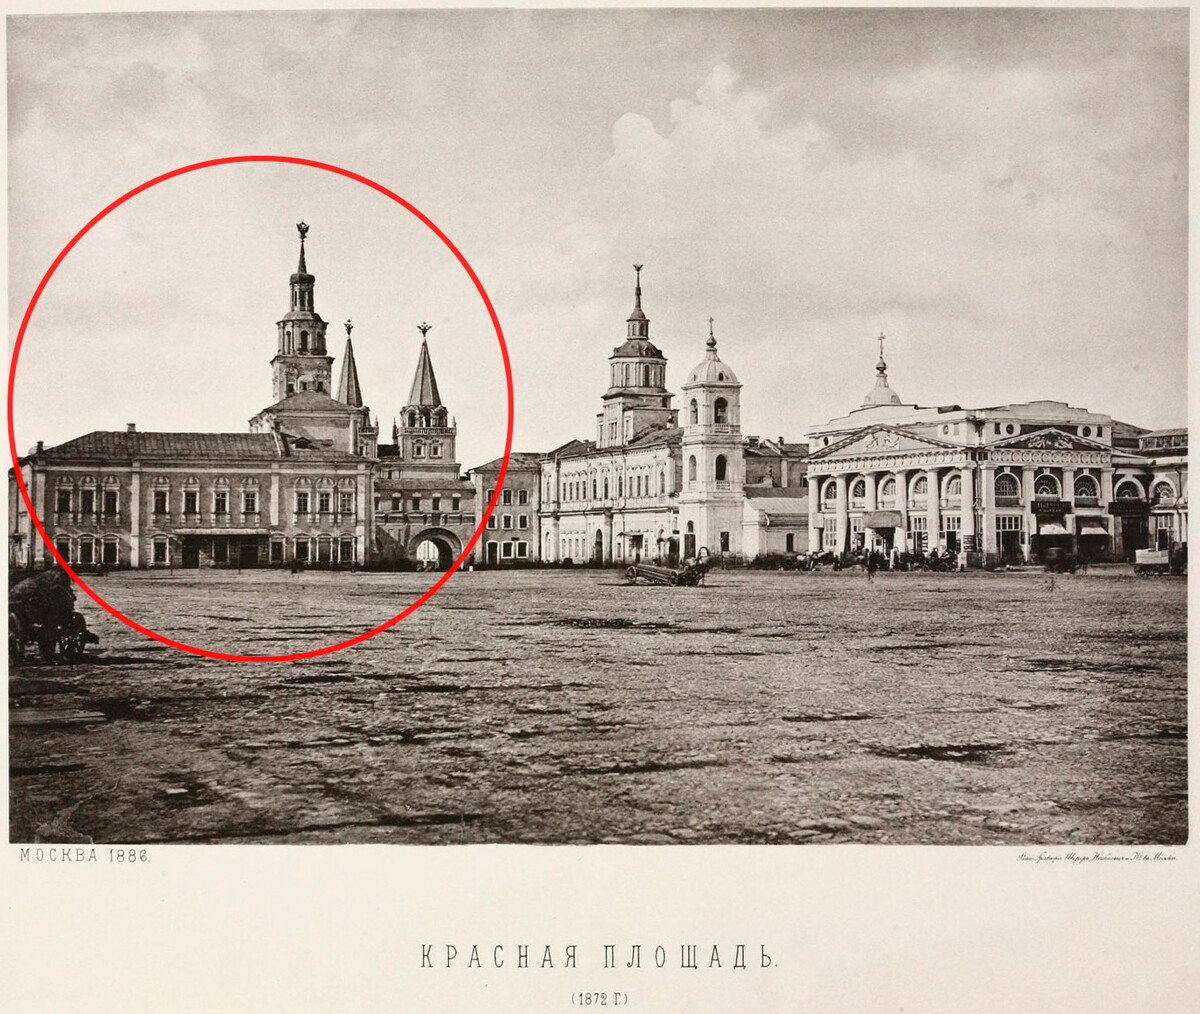 Bangunan Zemsky Prikaz di Lapangan Merah, 1872.